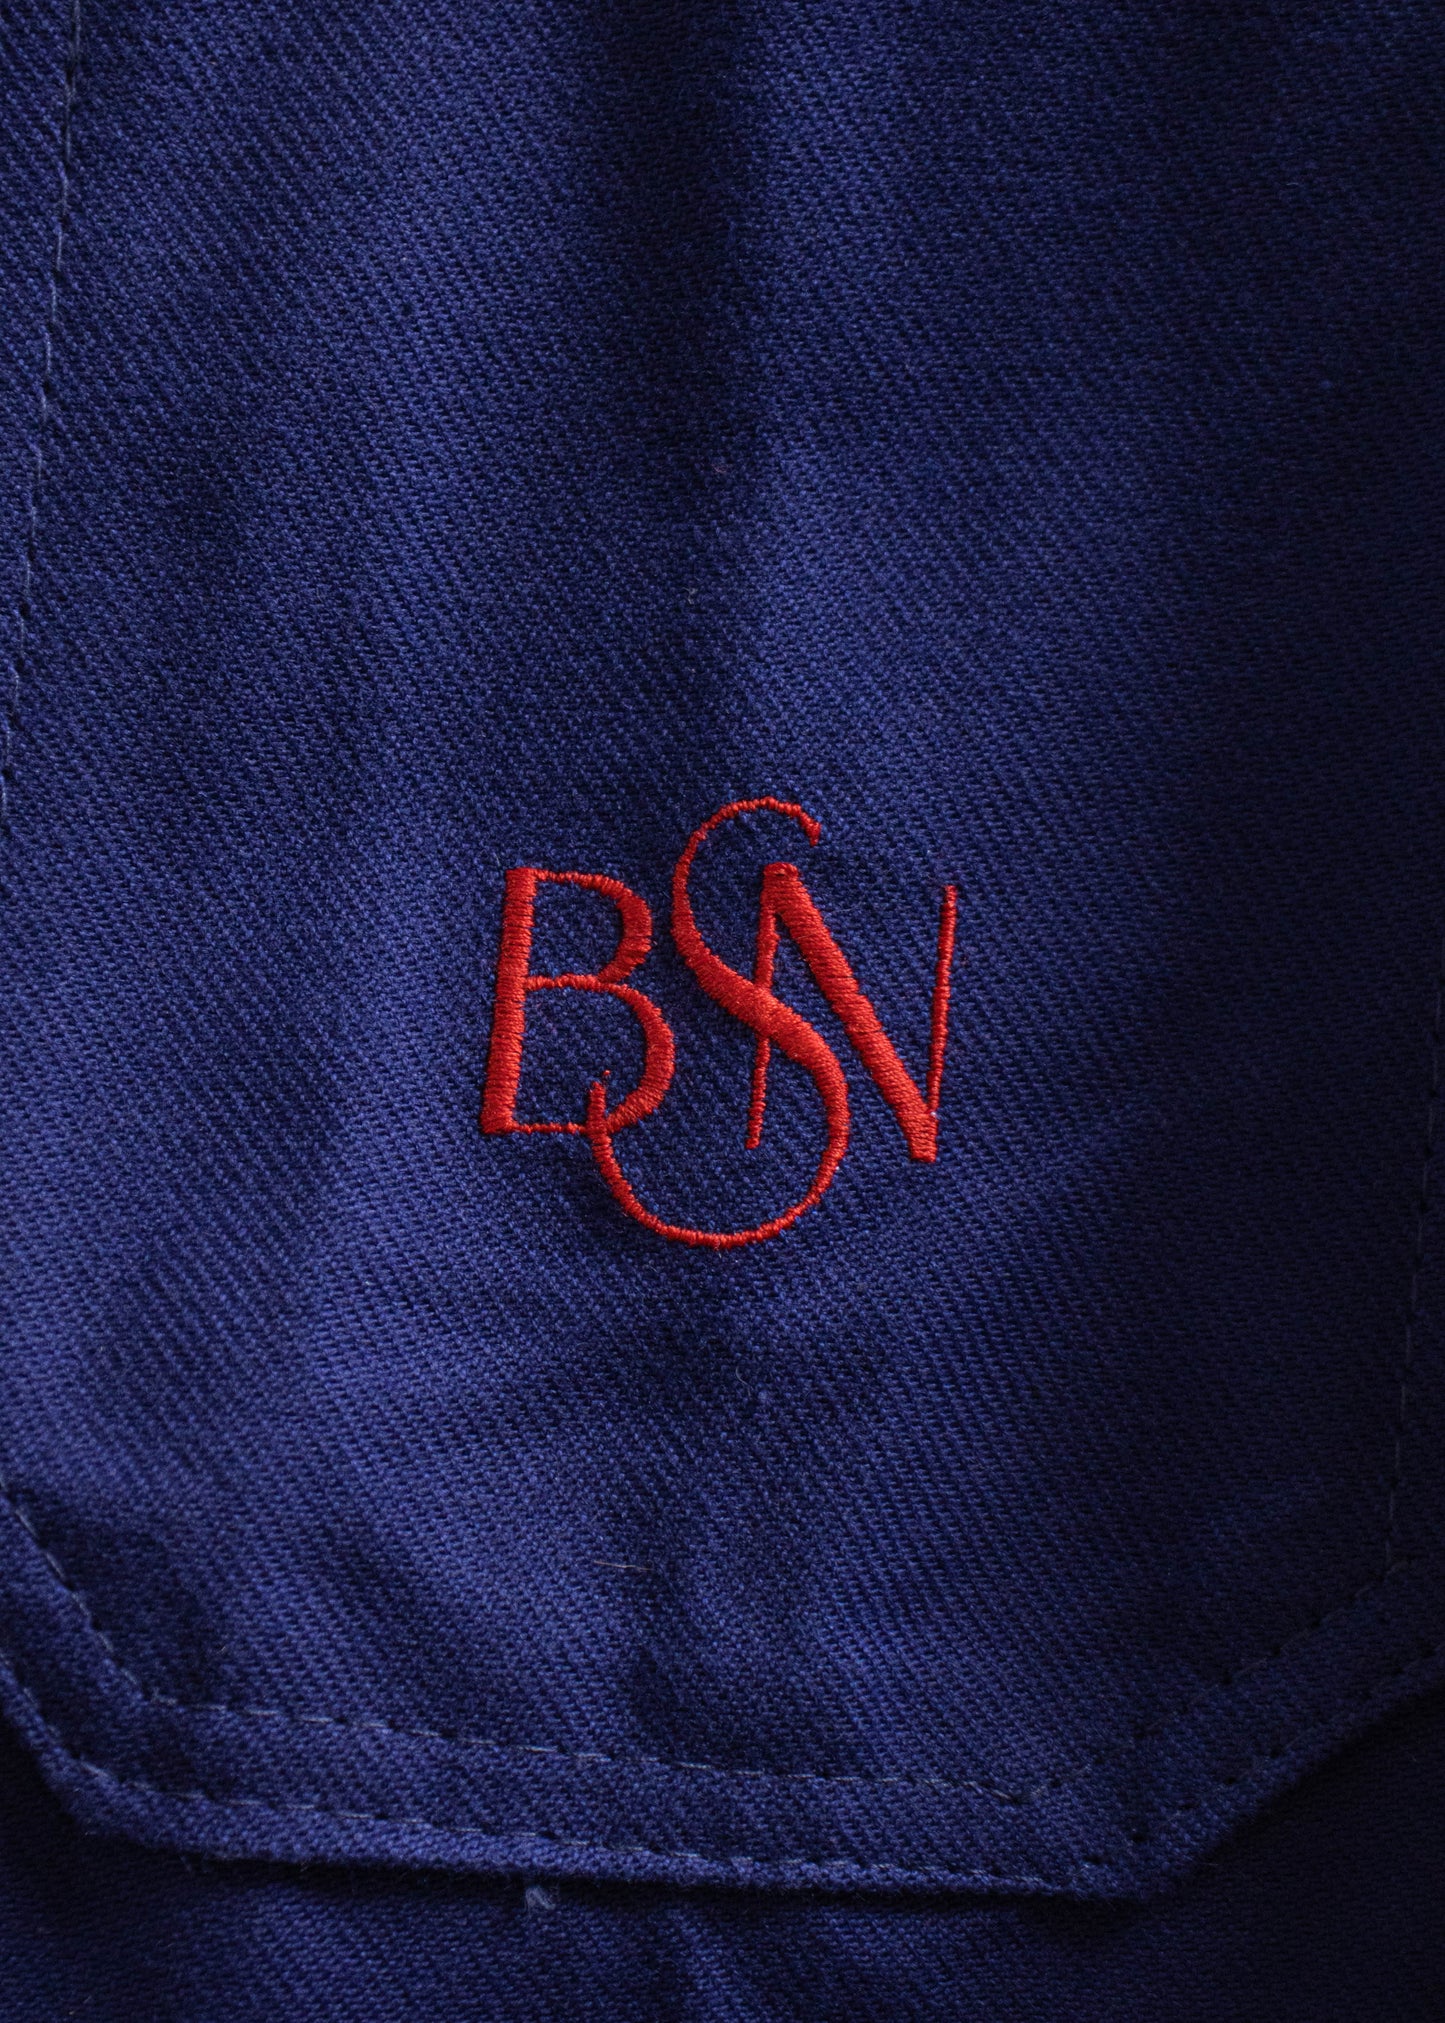 1970s Deadstock Sanforized French Workwear Chore Jacket Size S/M